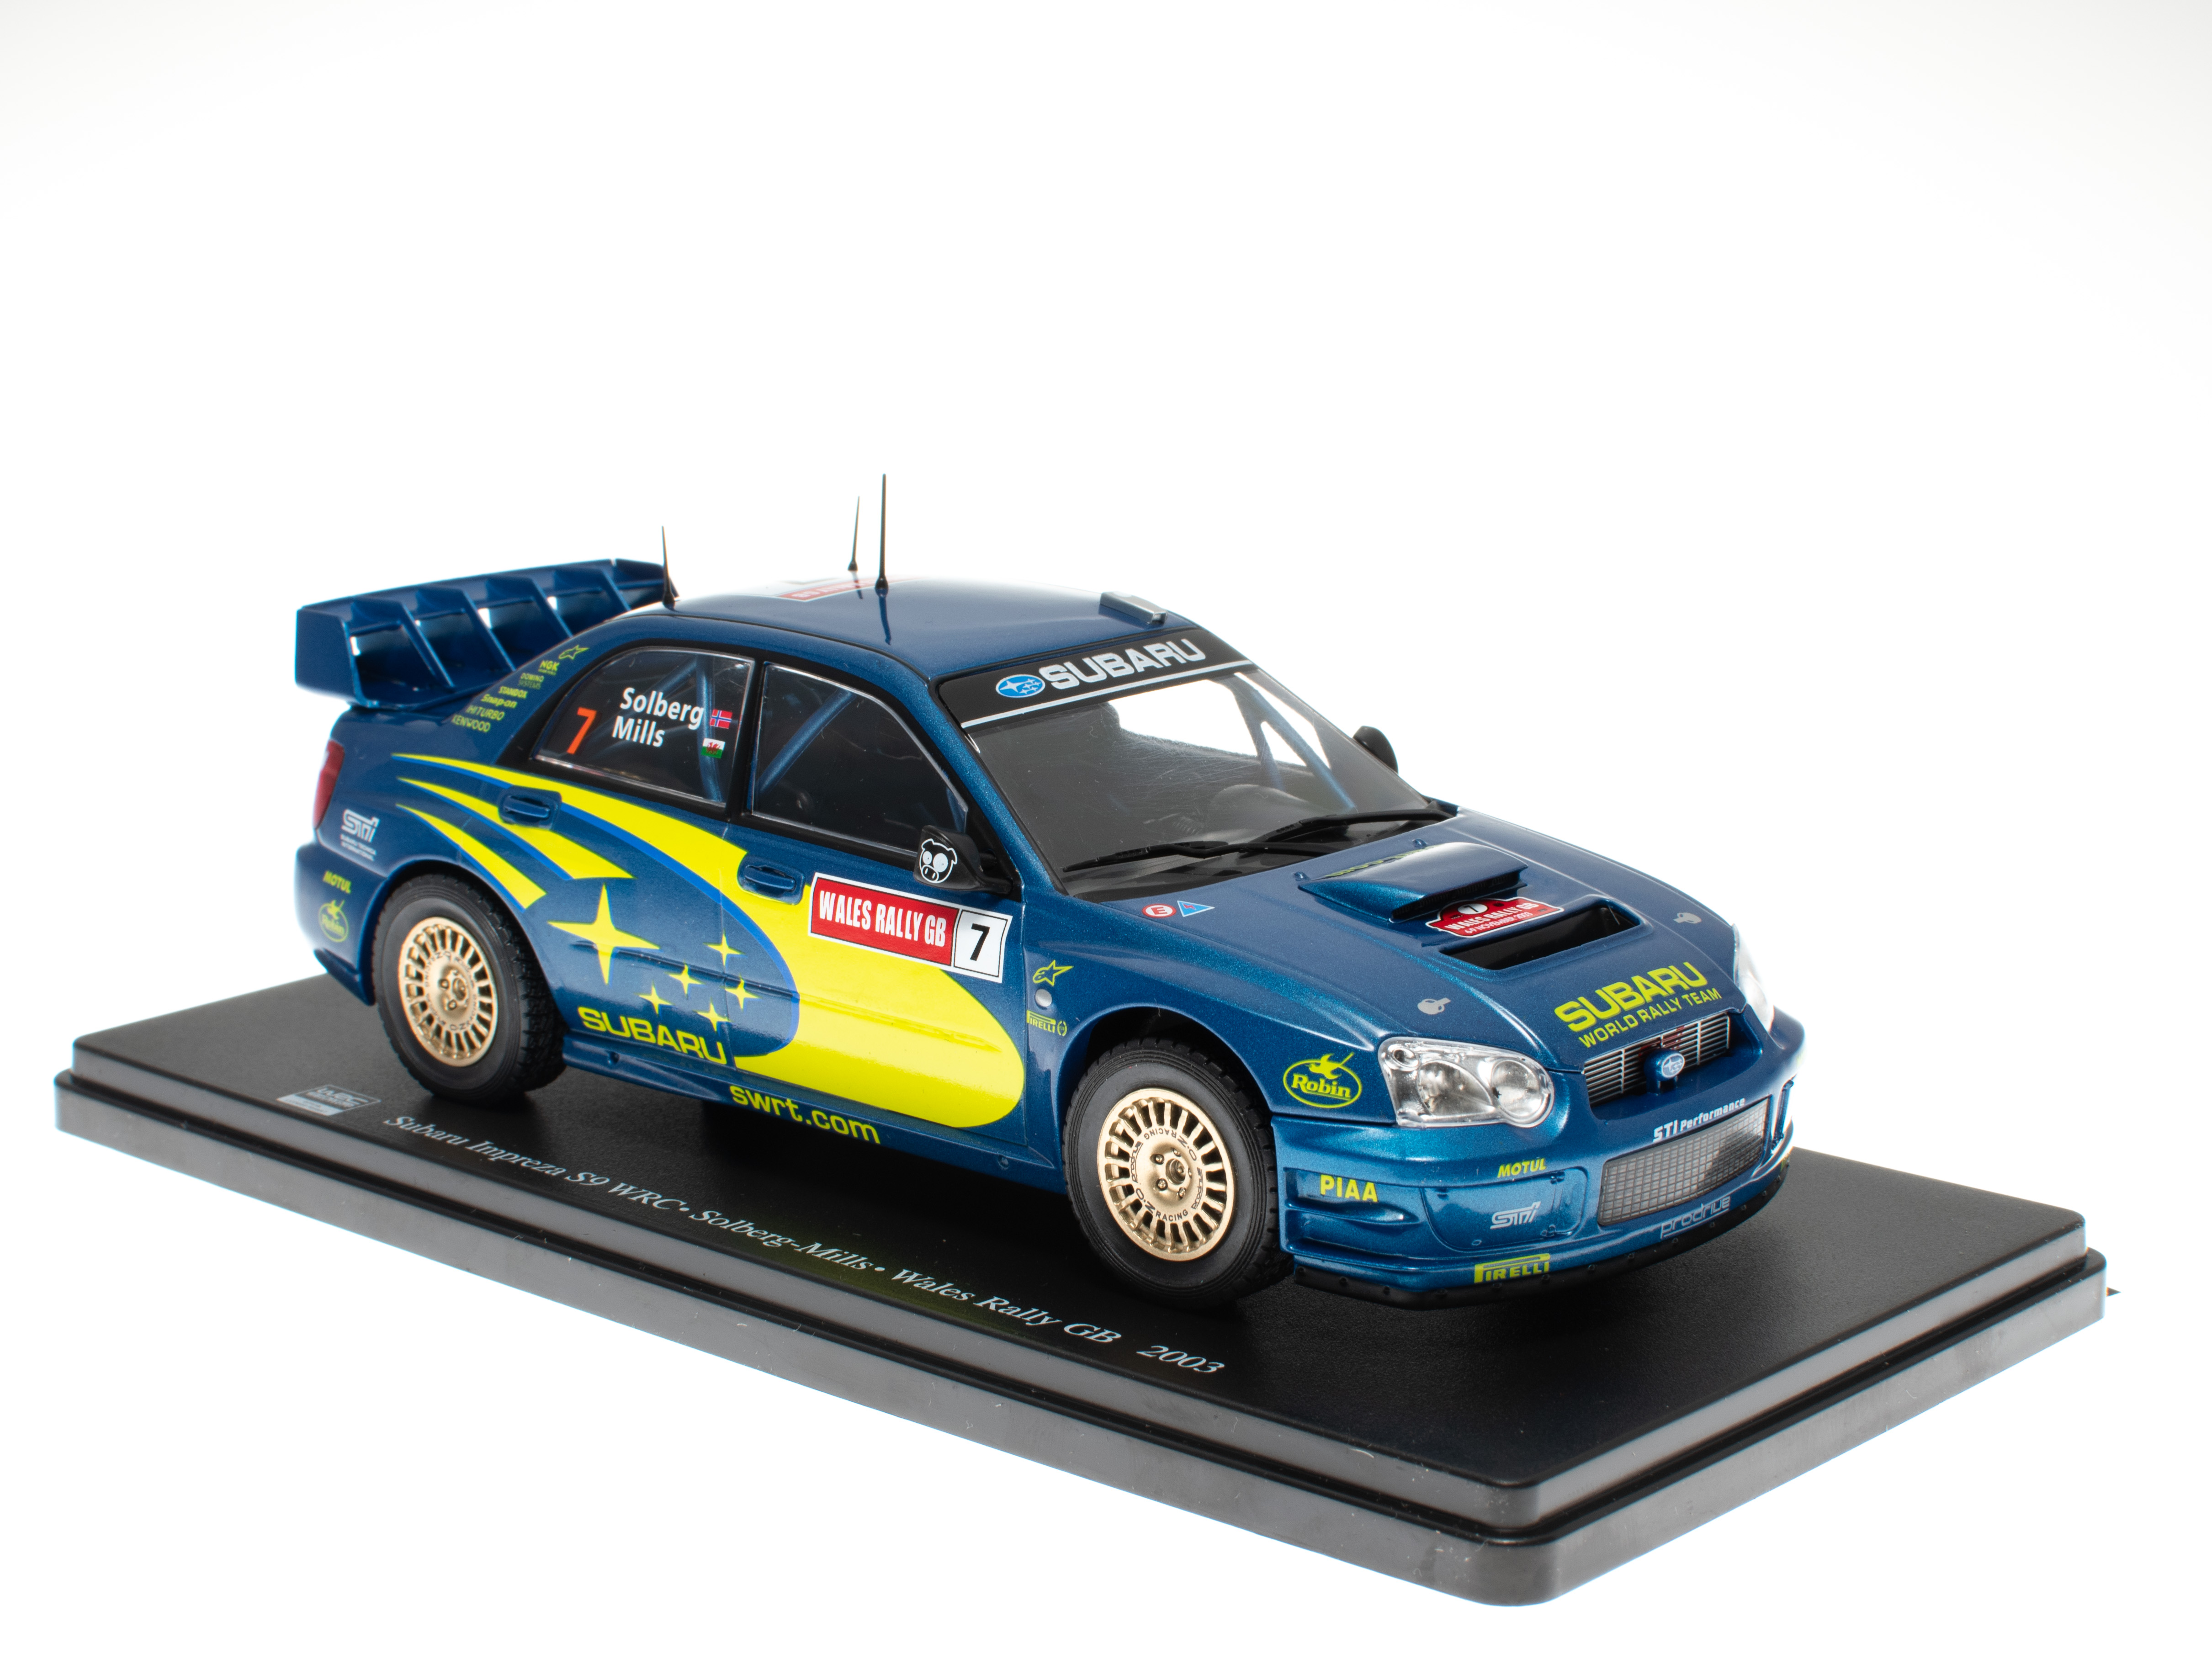 Subaru Impreza S9 WRC - Solberg - Mills - Wales Rally GB 2003